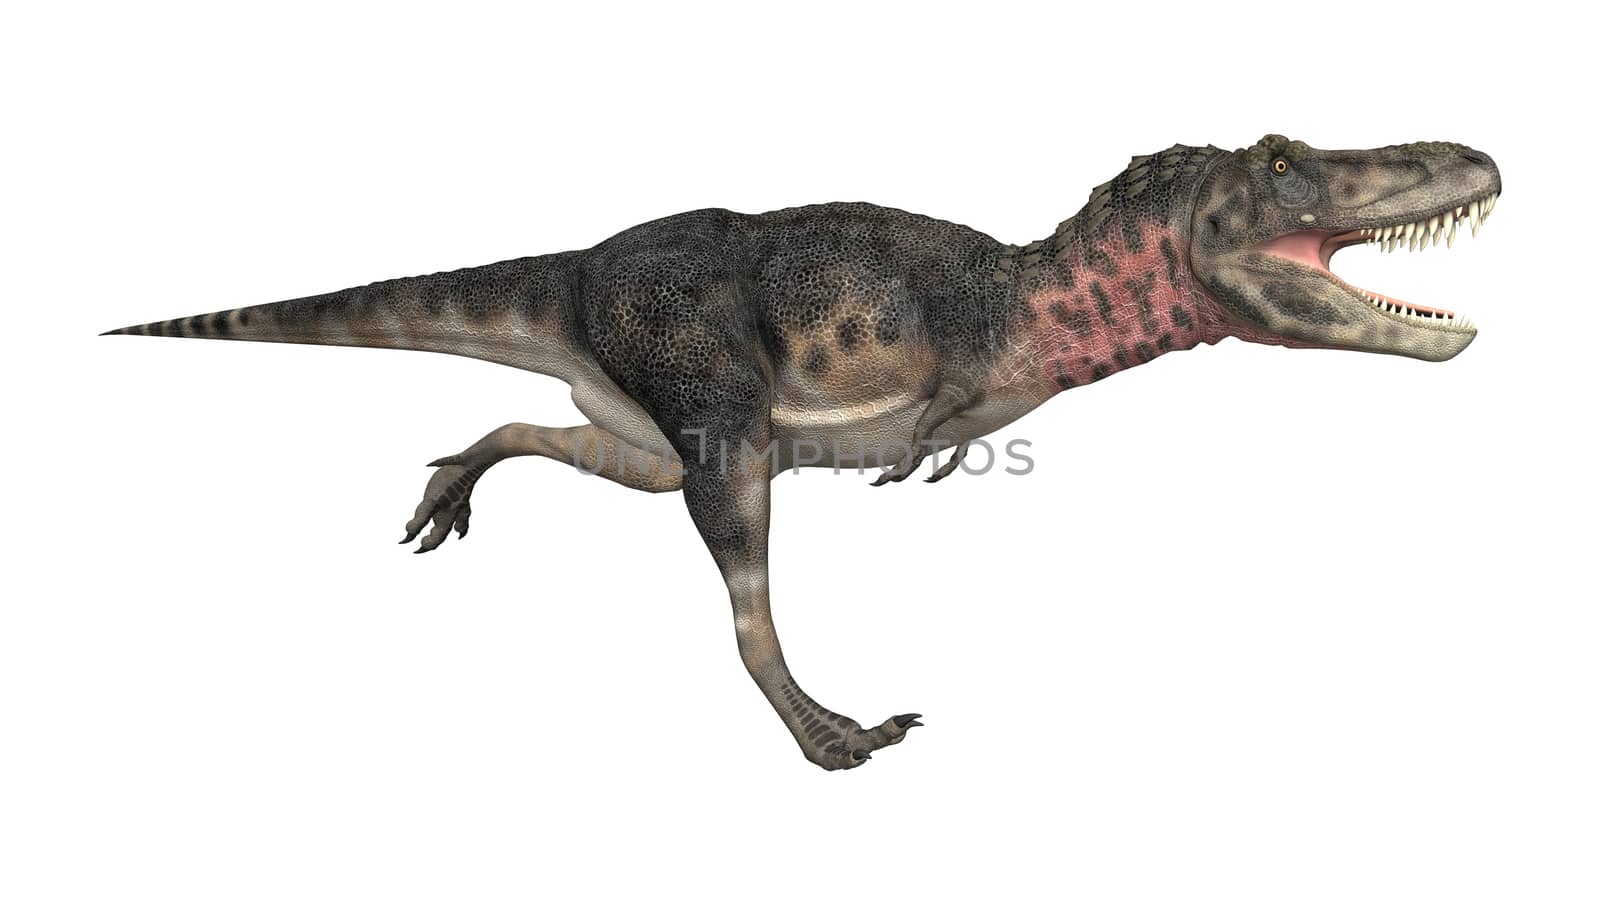 3D digital render of a dinosaur tarbosaurus running isolated on white background